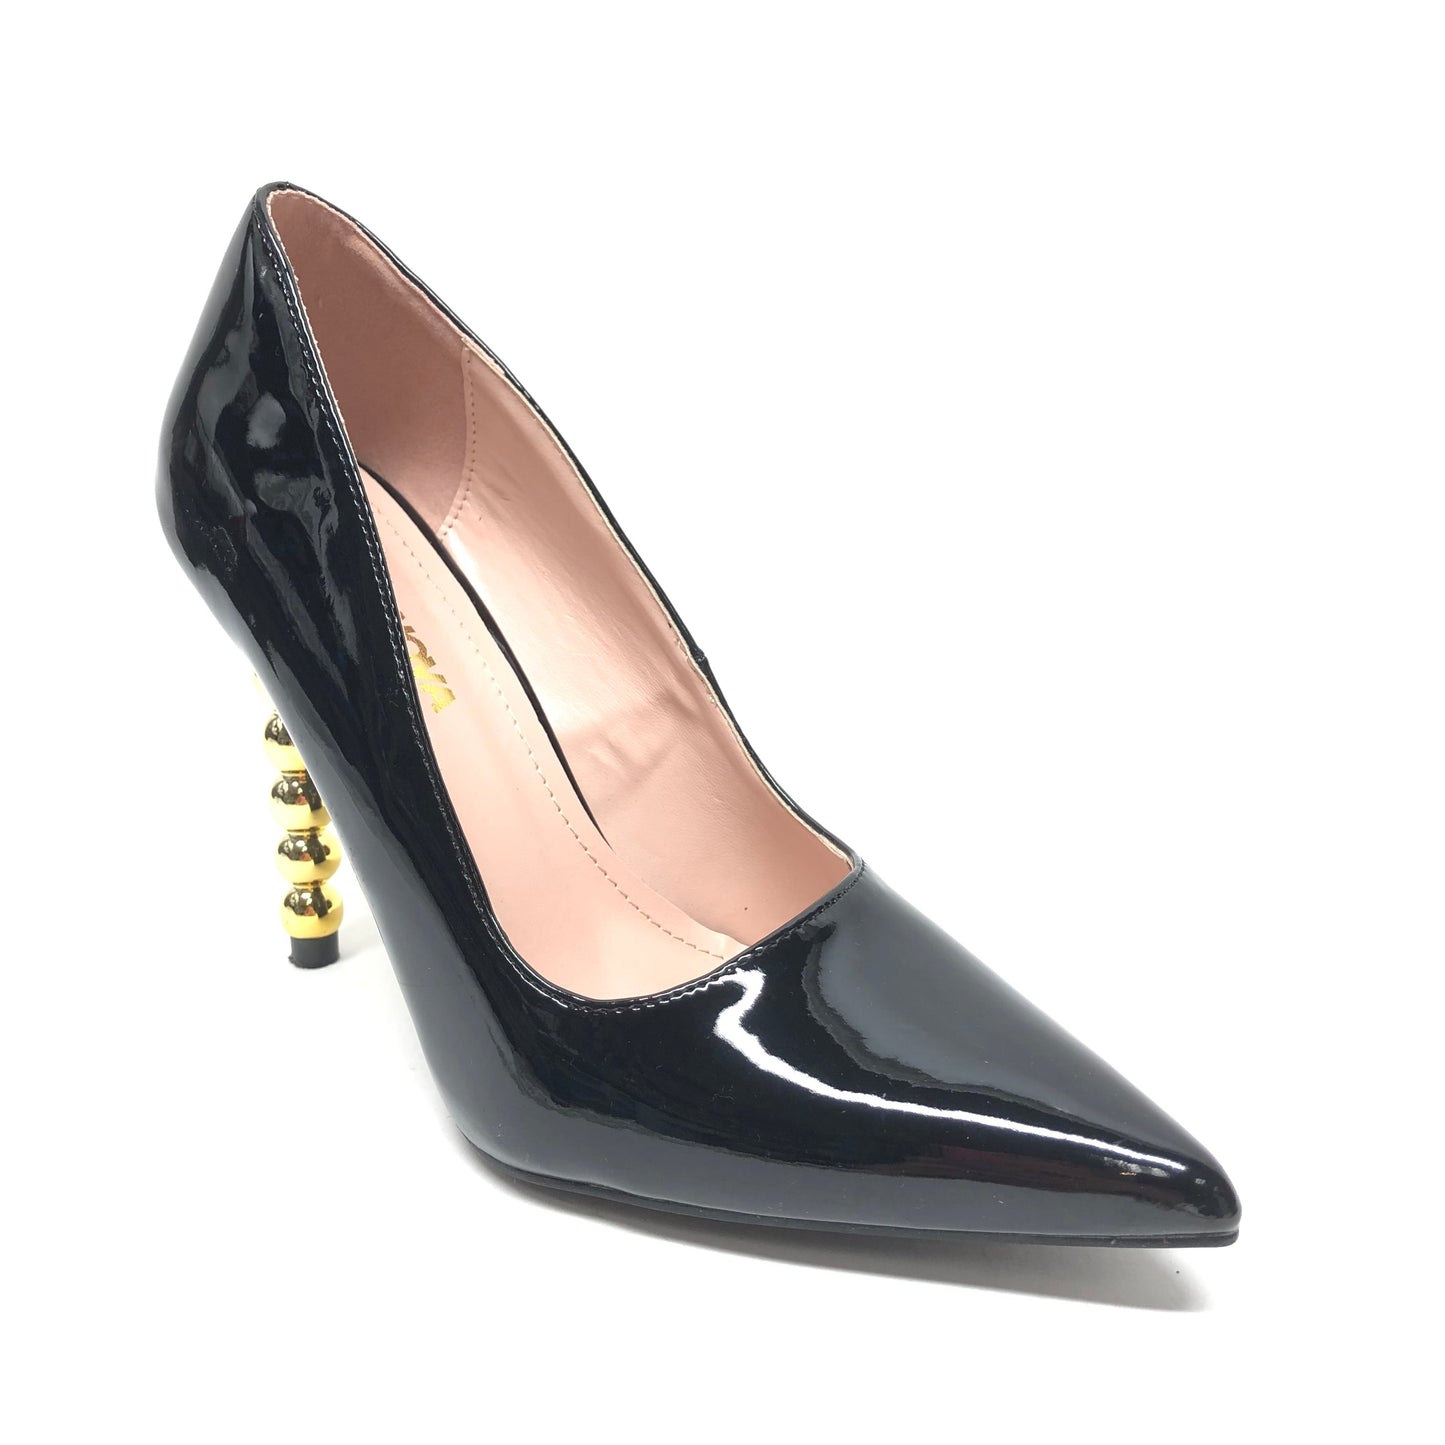 Black & Gold Shoes Heels Stiletto Fashion Nova, Size 8